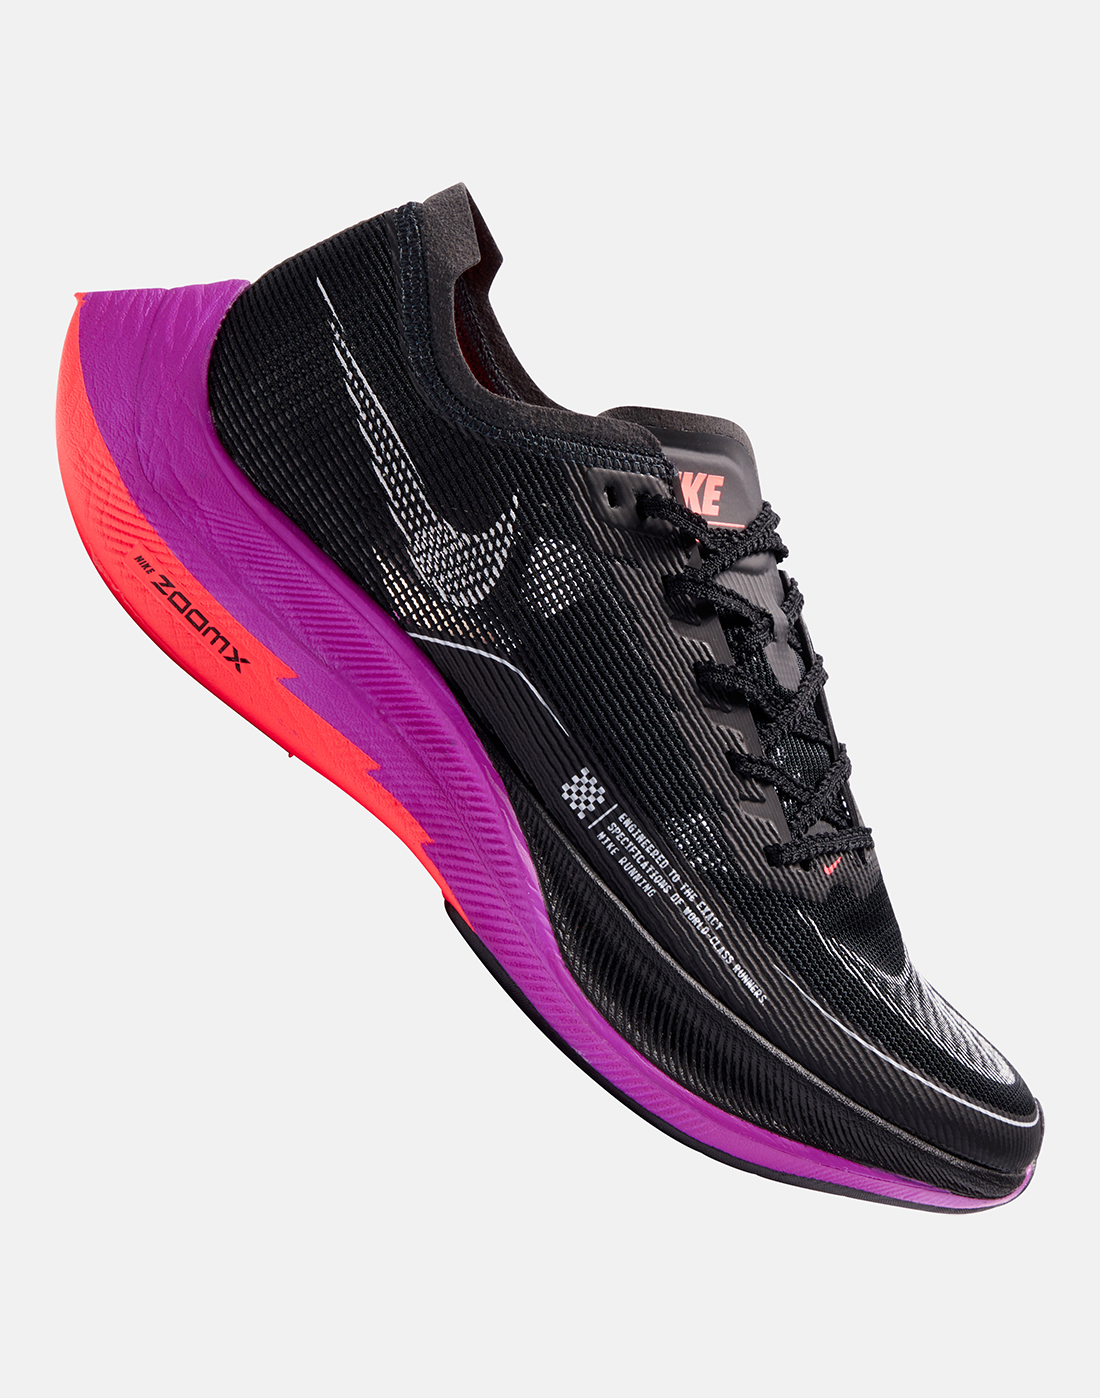 Nike Men's ZoomX Vaporfly Next% Running Shoe